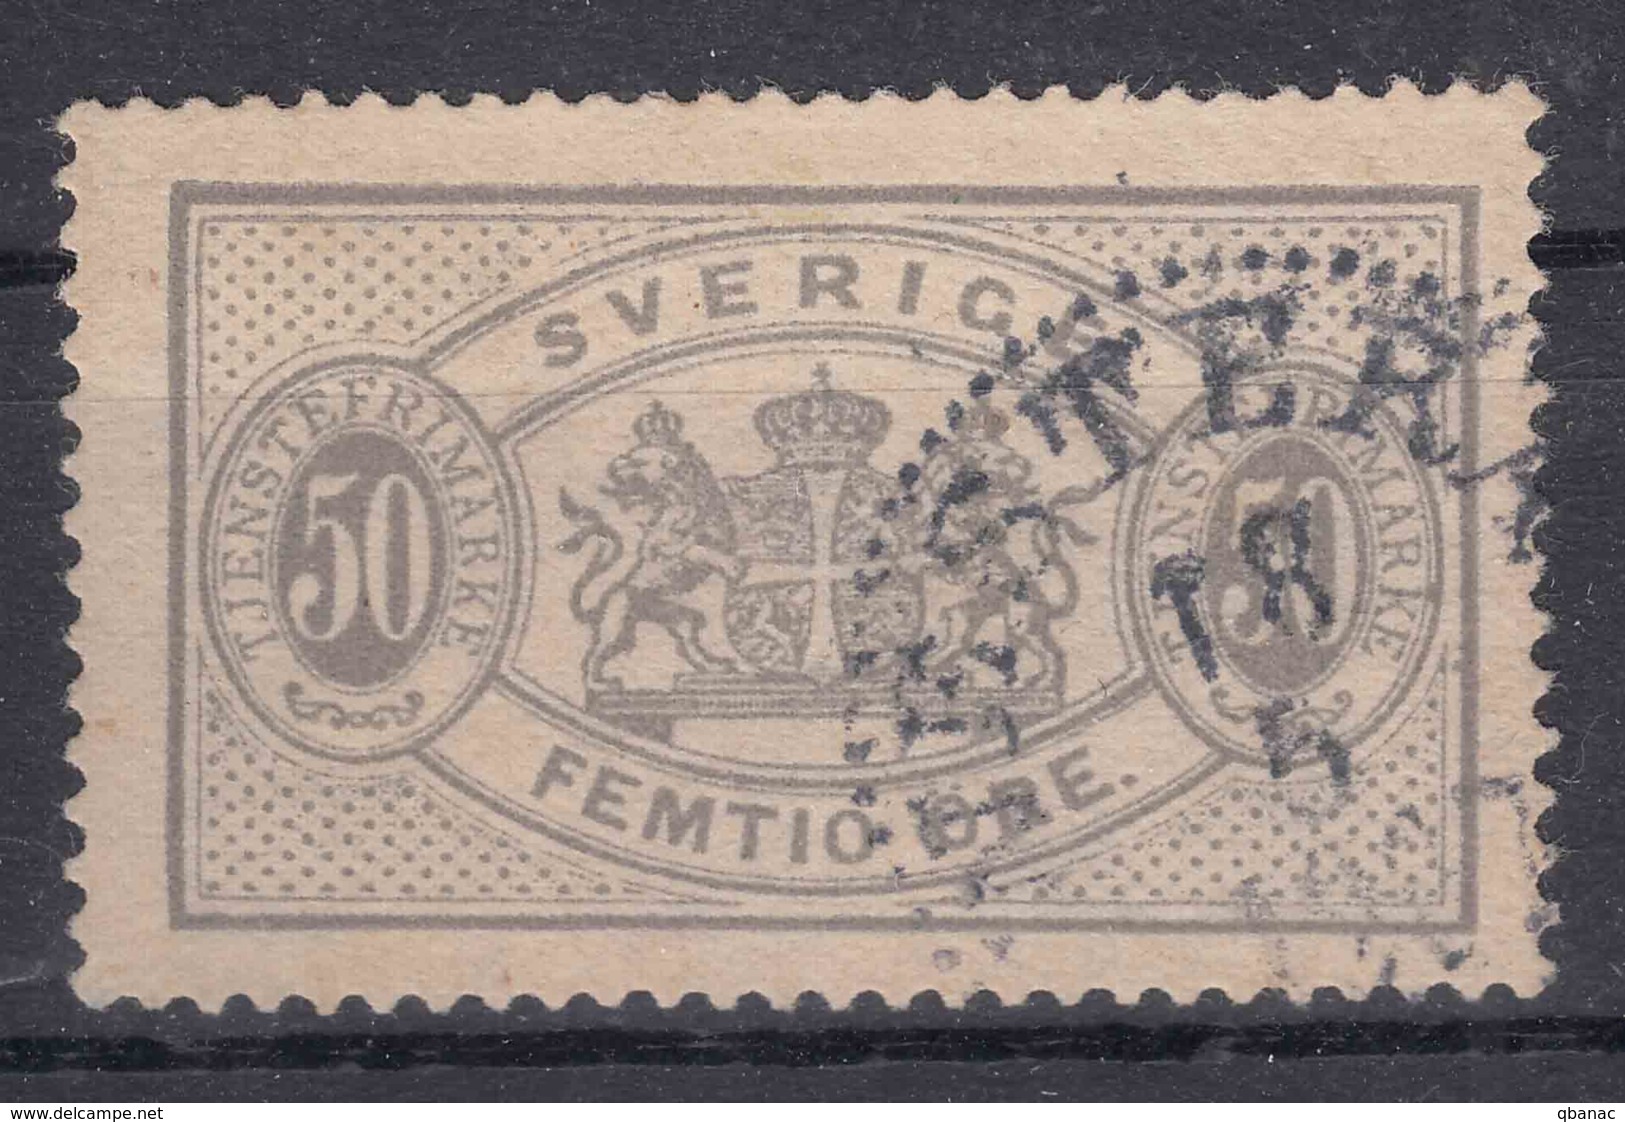 Sweden Official Stamp 1874 Mi#10 B A Used - Service